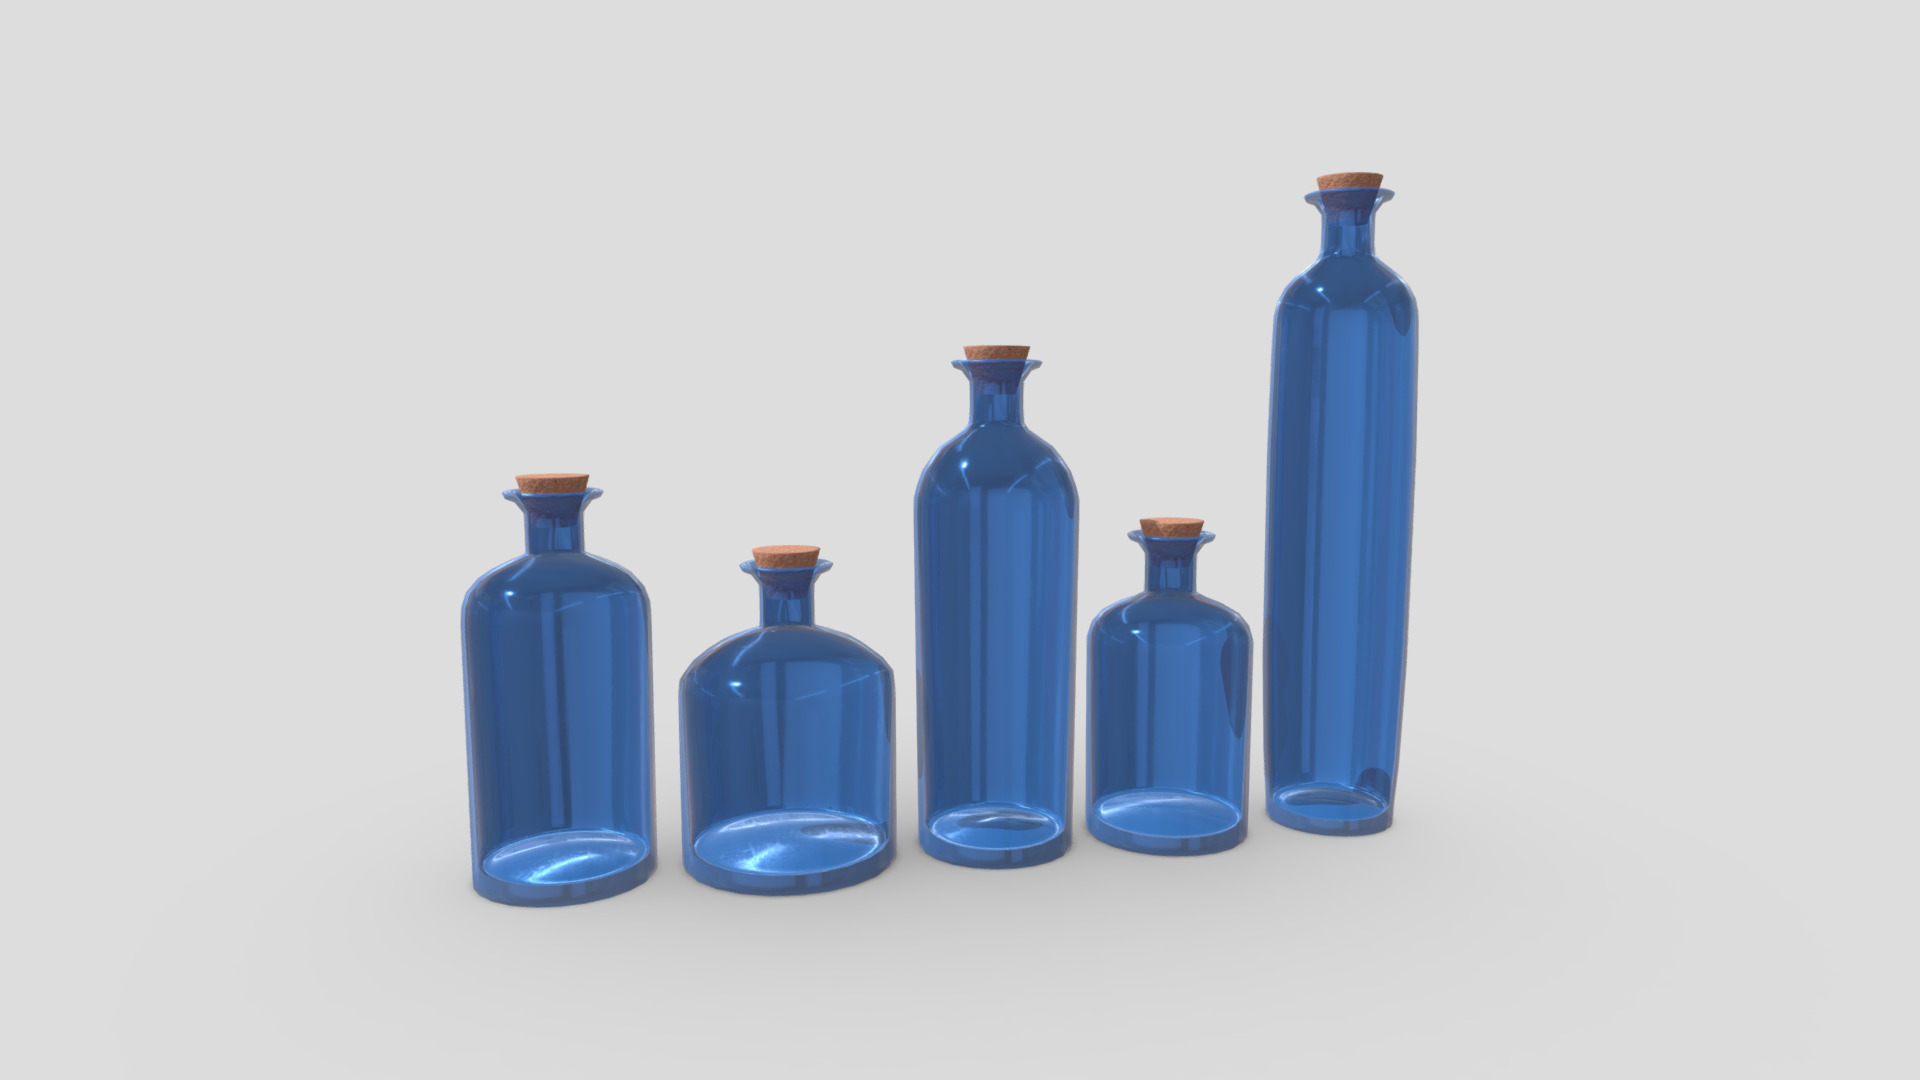 3D model Blue Bottles - This is a 3D model of the Blue Bottles. The 3D model is about a group of blue glass bottles.